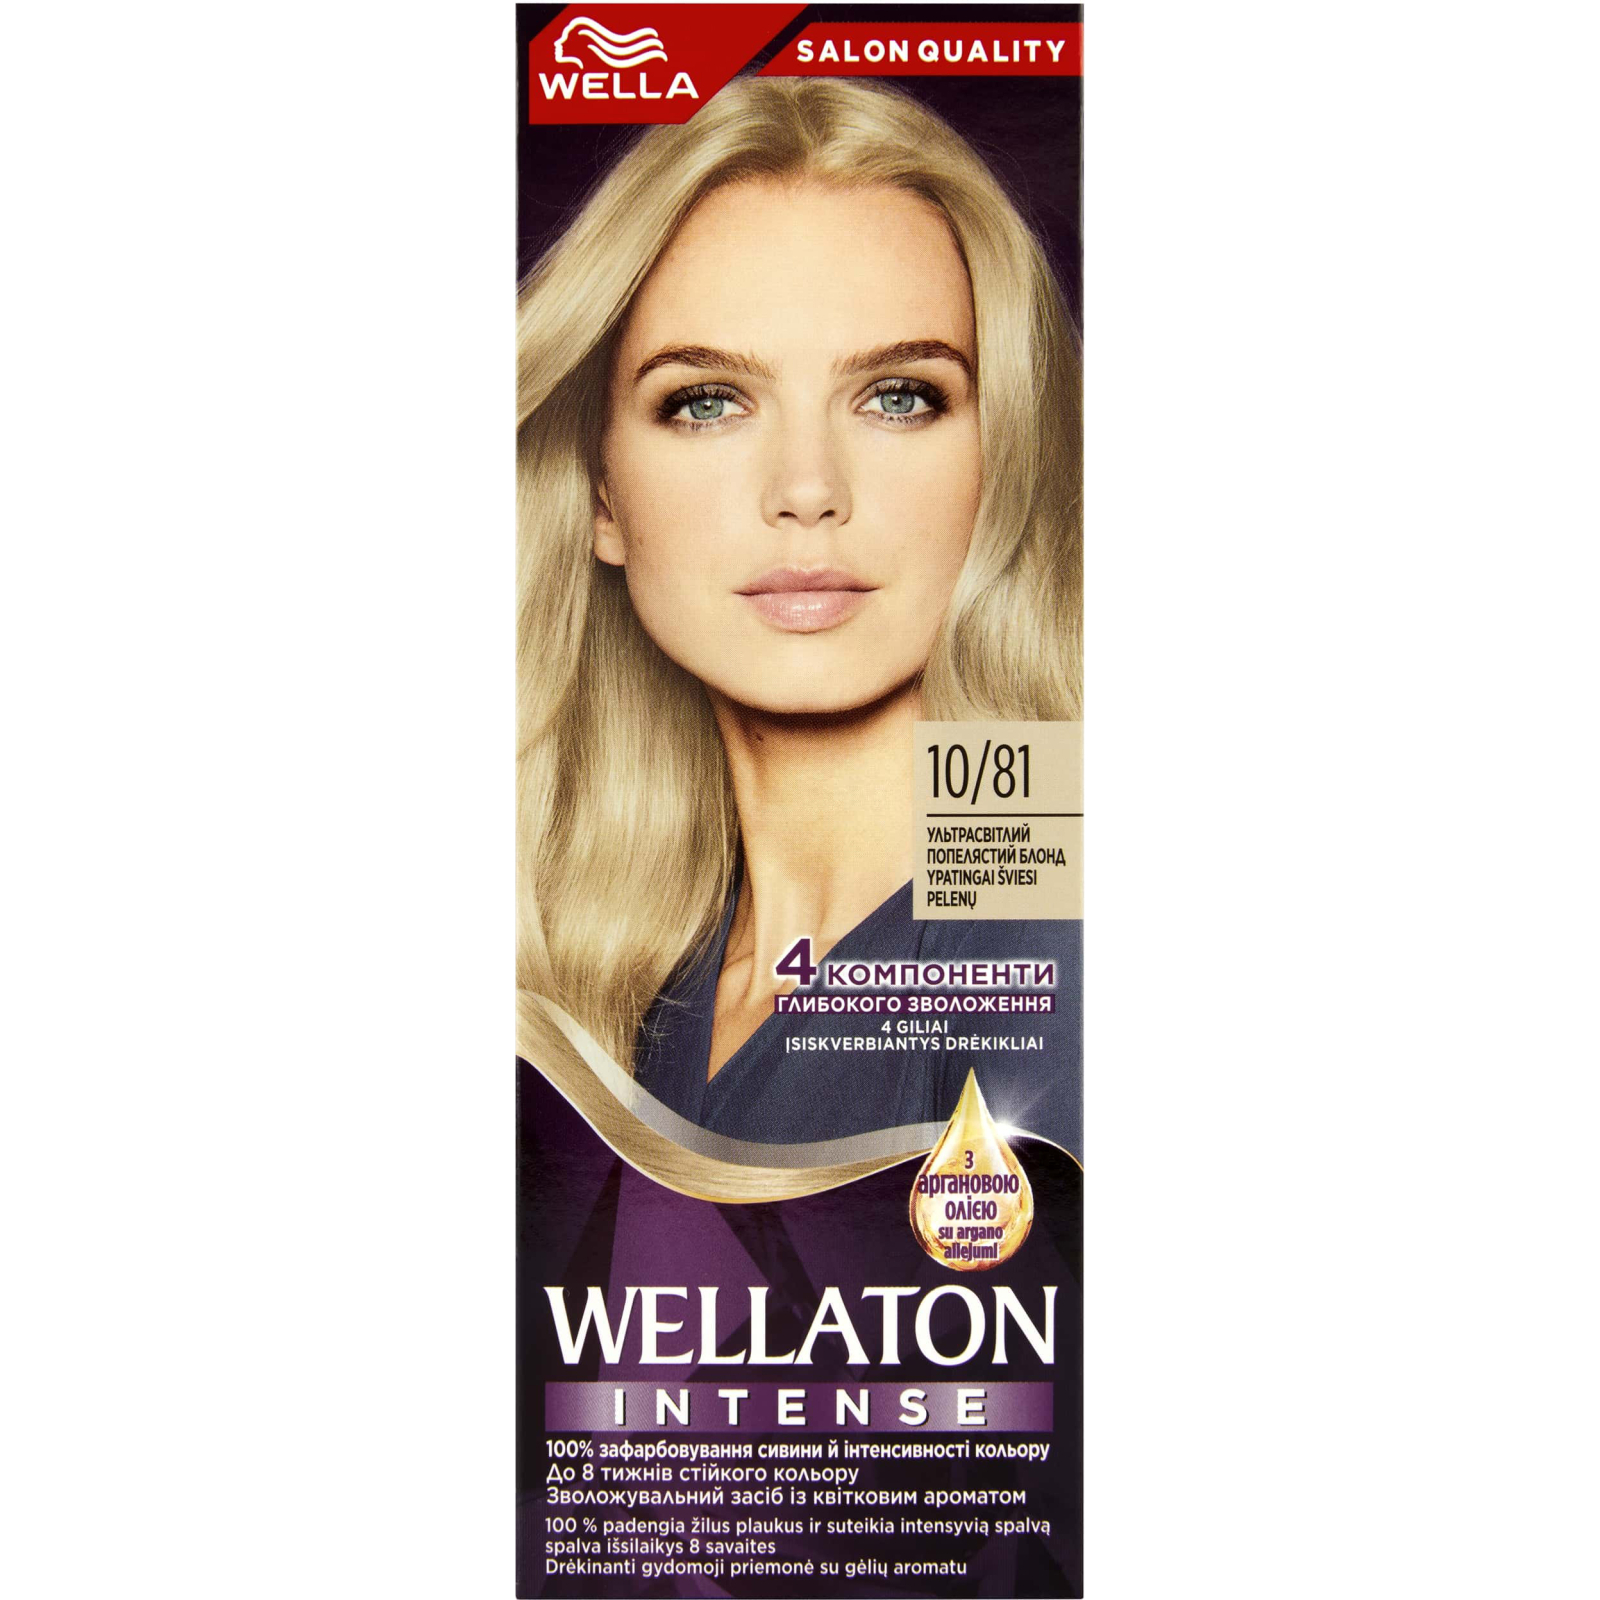 Краска для волос Wellaton 6/7 Шоколад 110 мл (4064666085692)